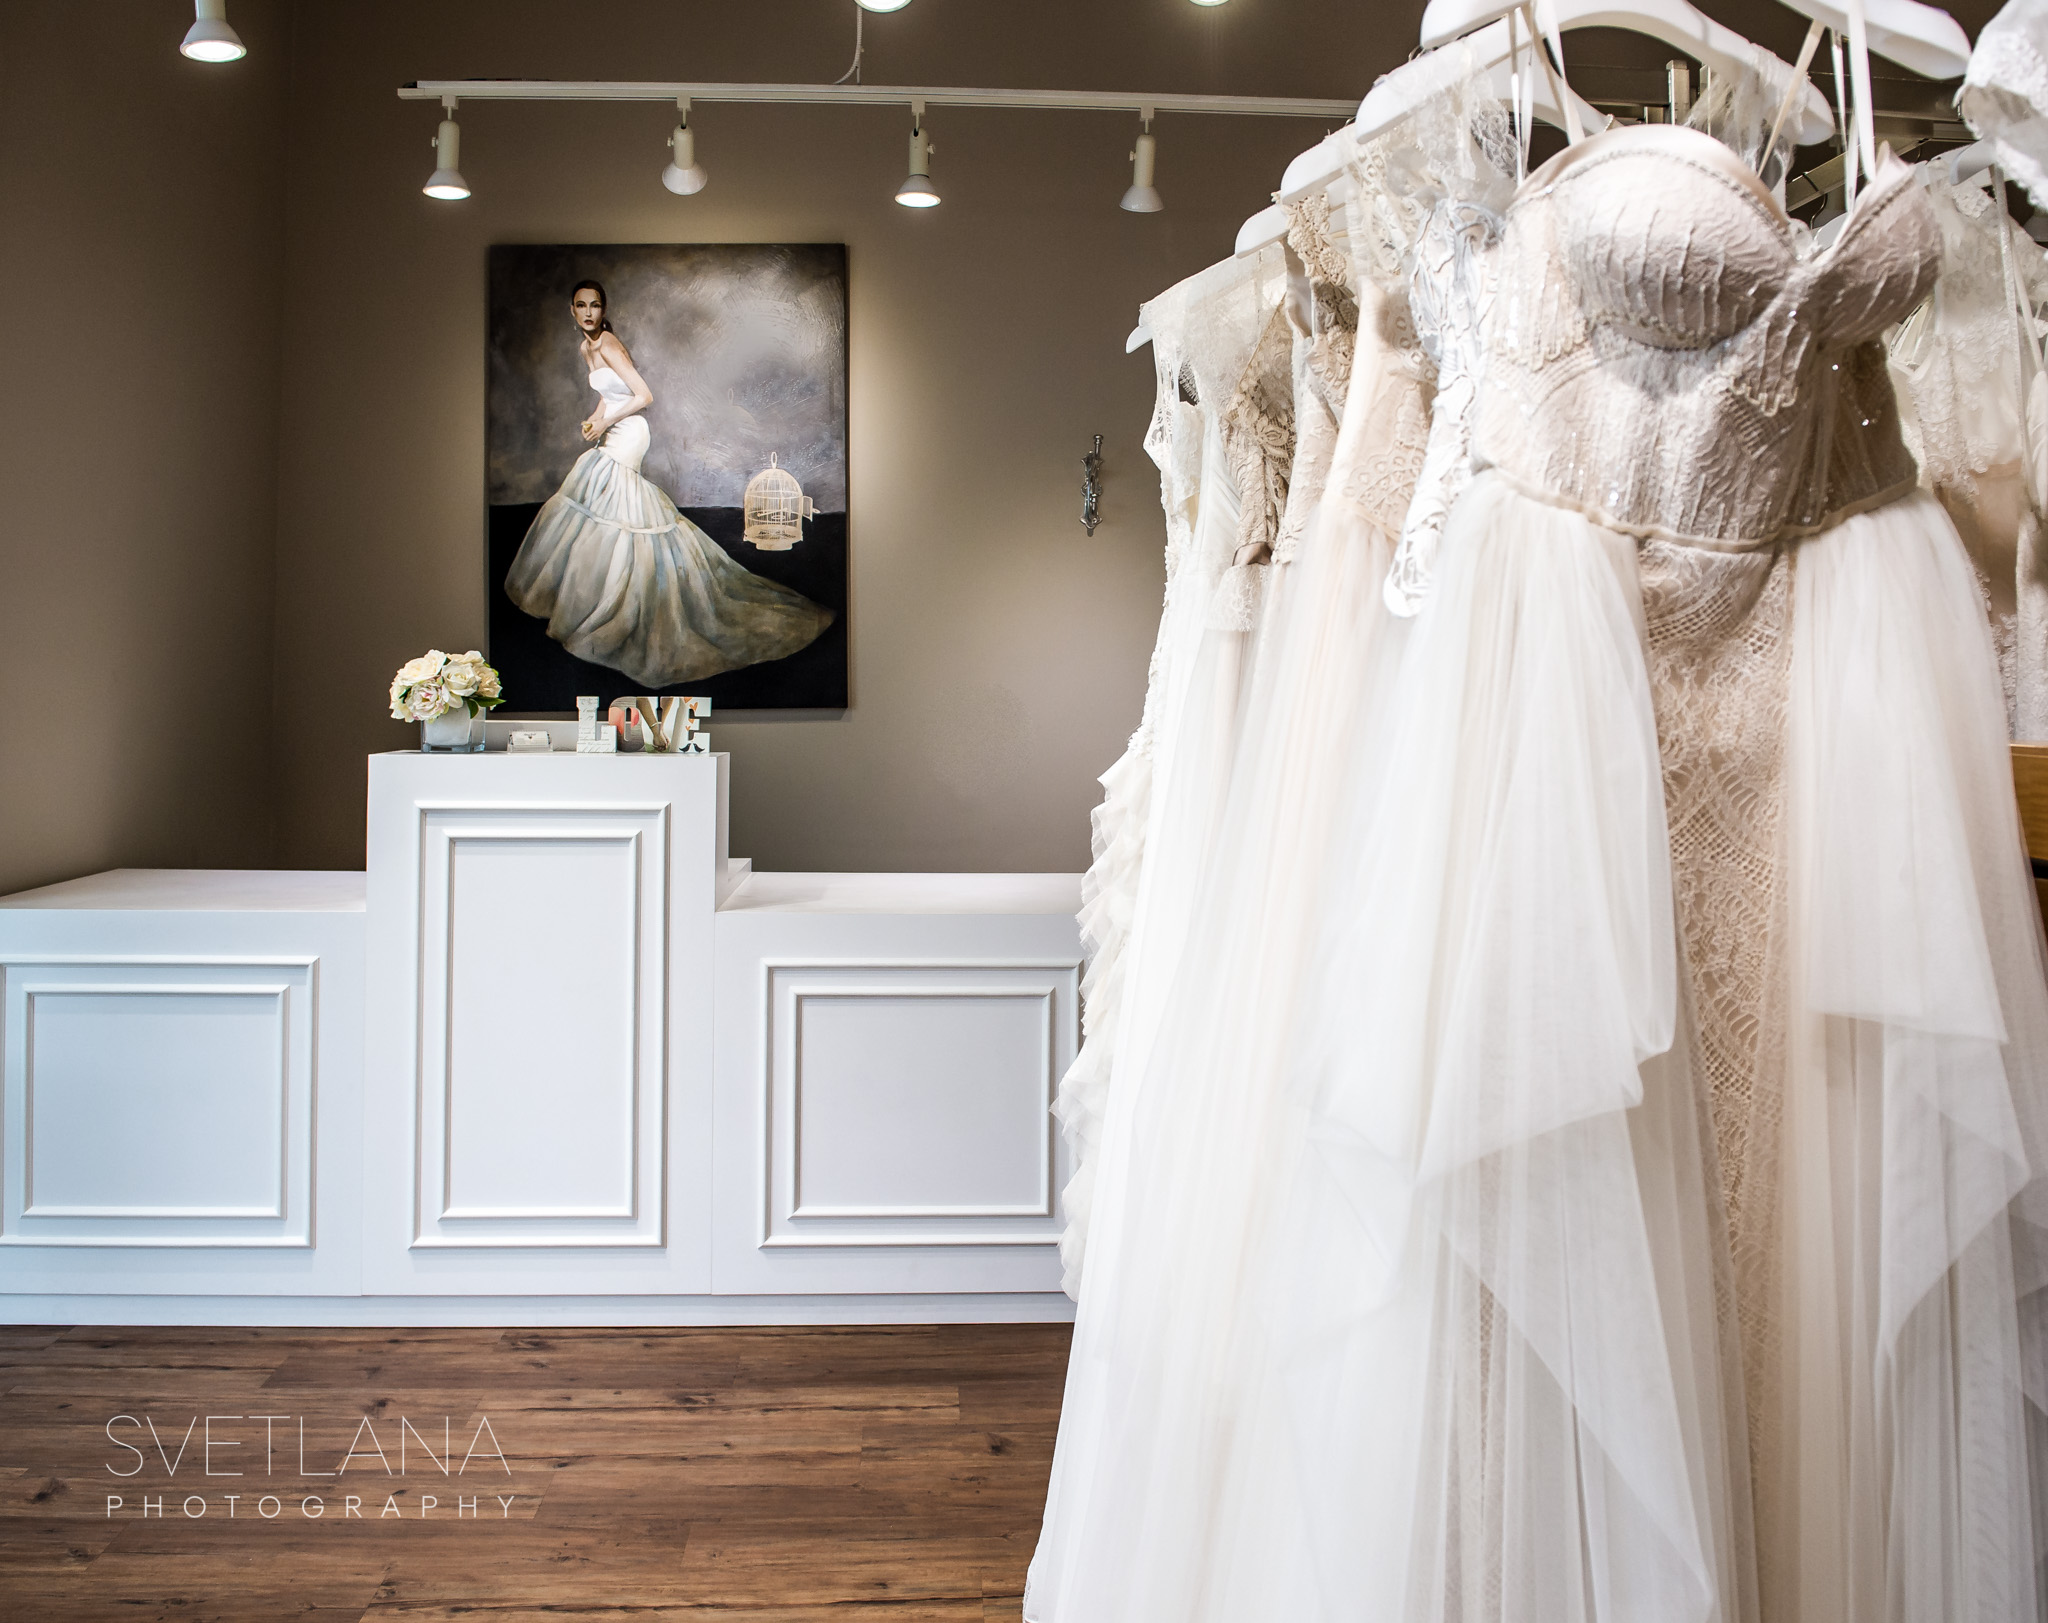 Designer Gown For Wedding Party | Maharani Designer Boutique,